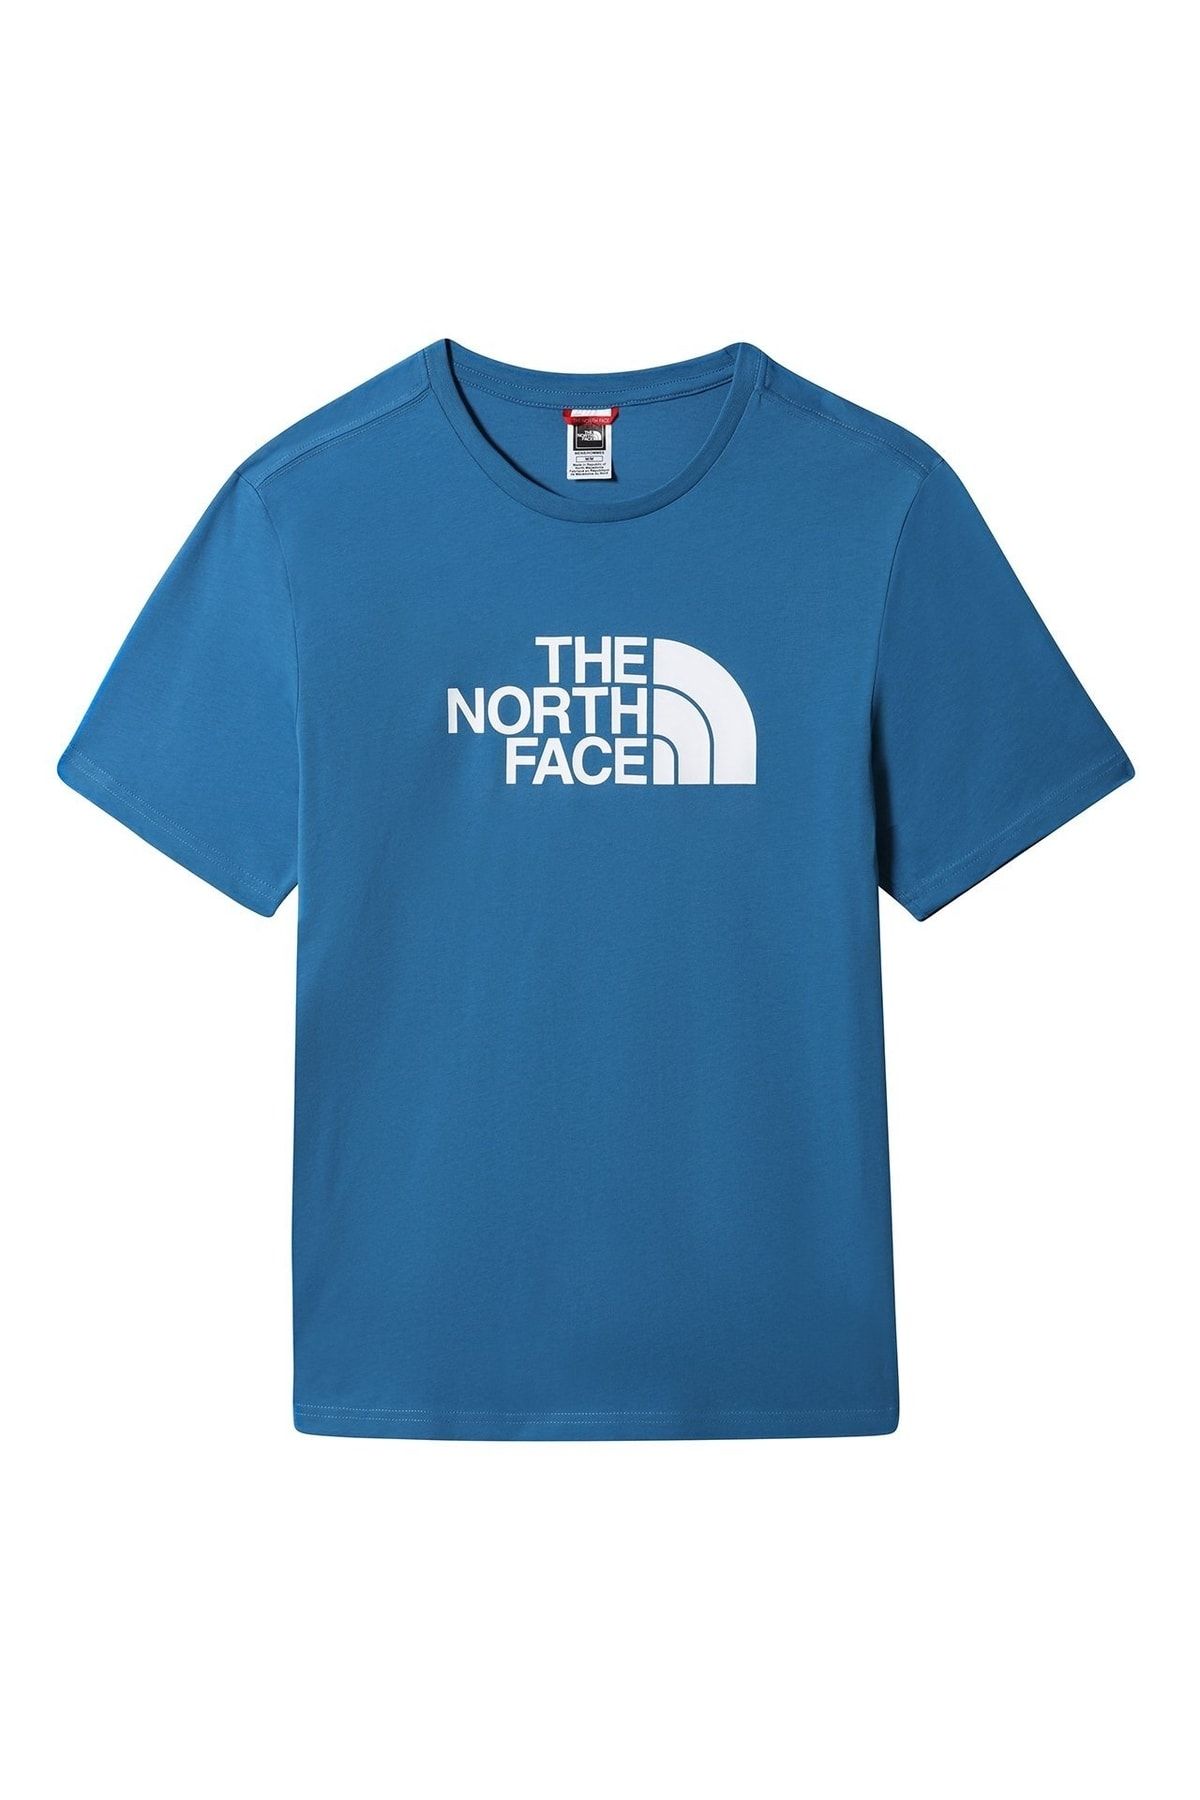 The North Face Erkek S/s Easy Tee Tişört - Eu Mavi